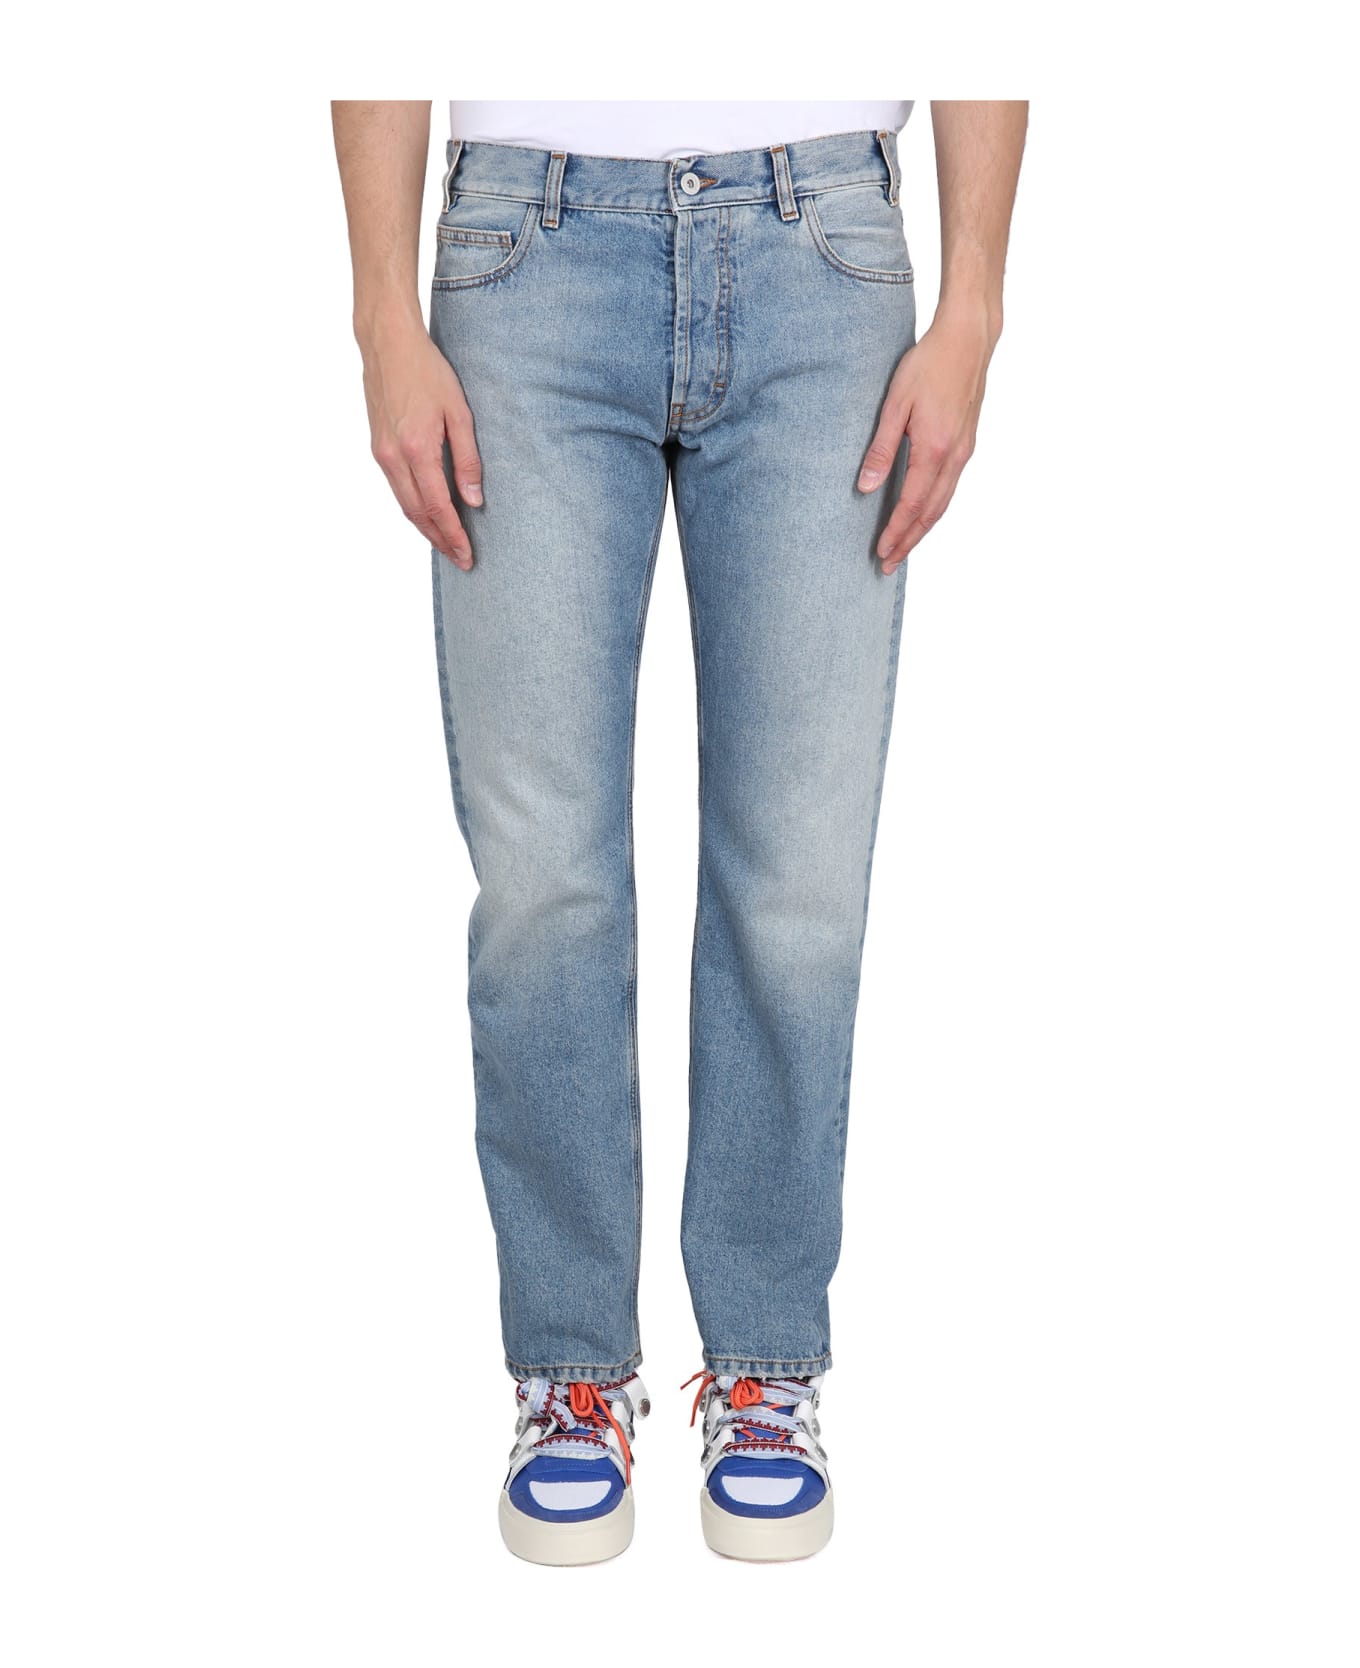 Marcelo Burlon Slim Fit Jeans - BLU